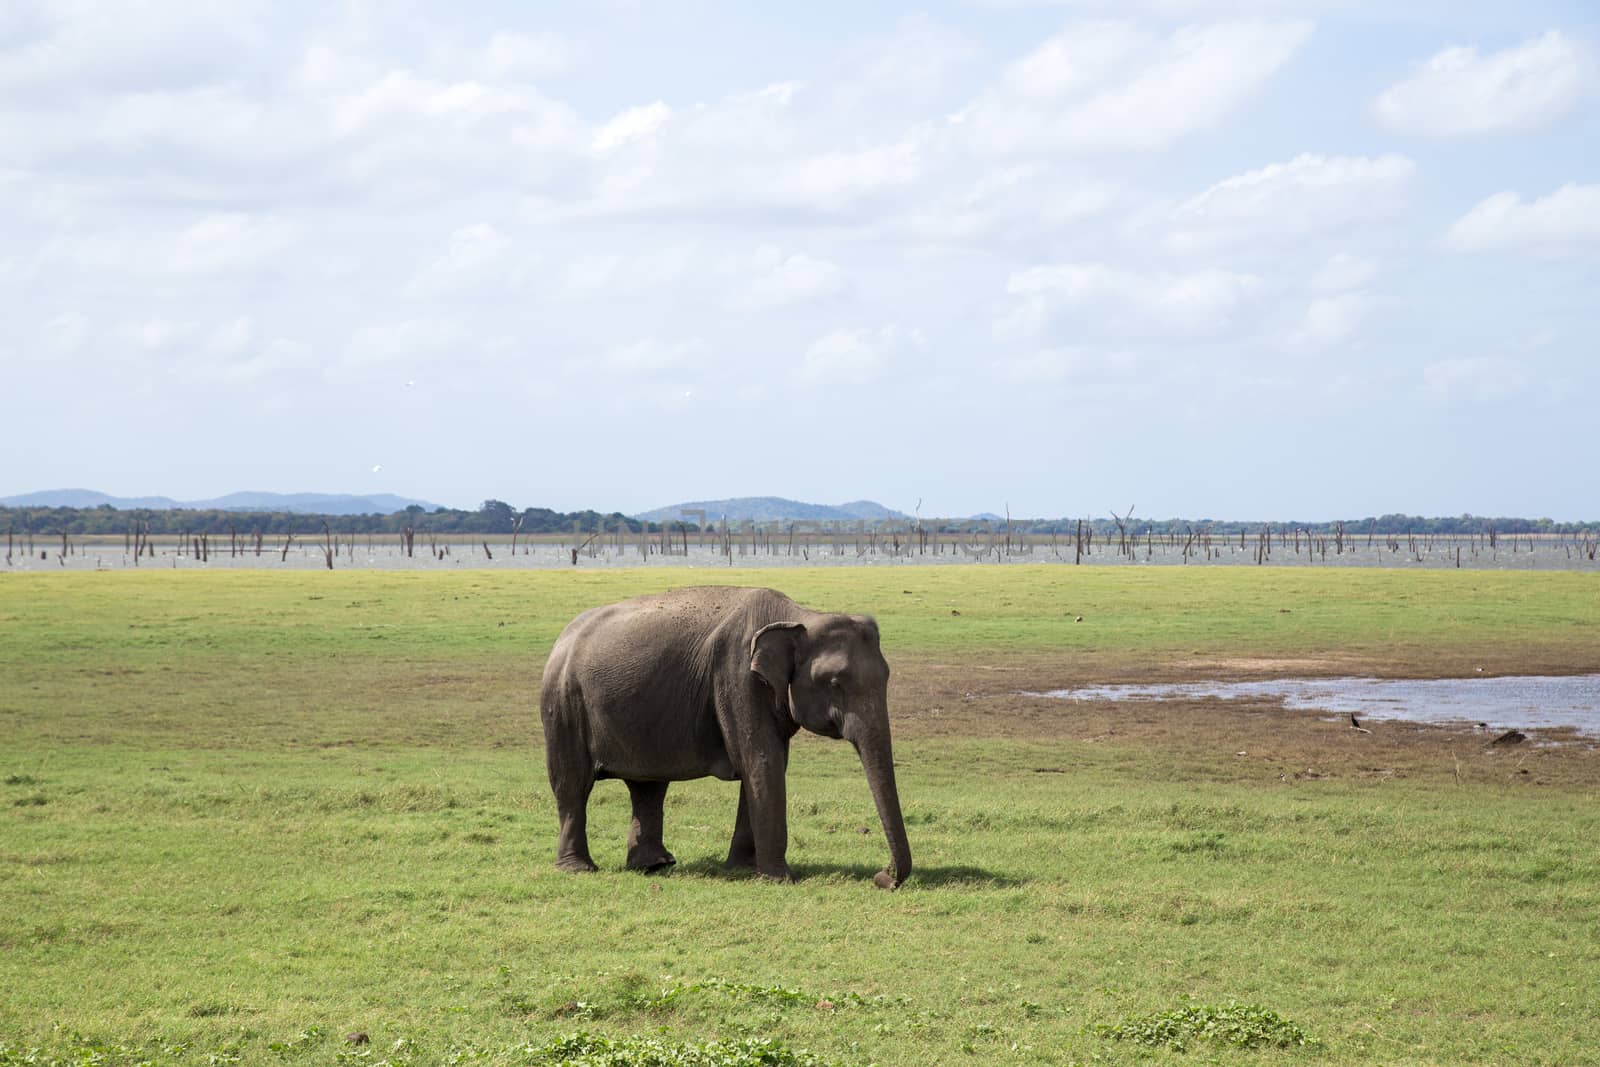 Elephant in Kaudulla National Park, Sri Lanka by oliverfoerstner